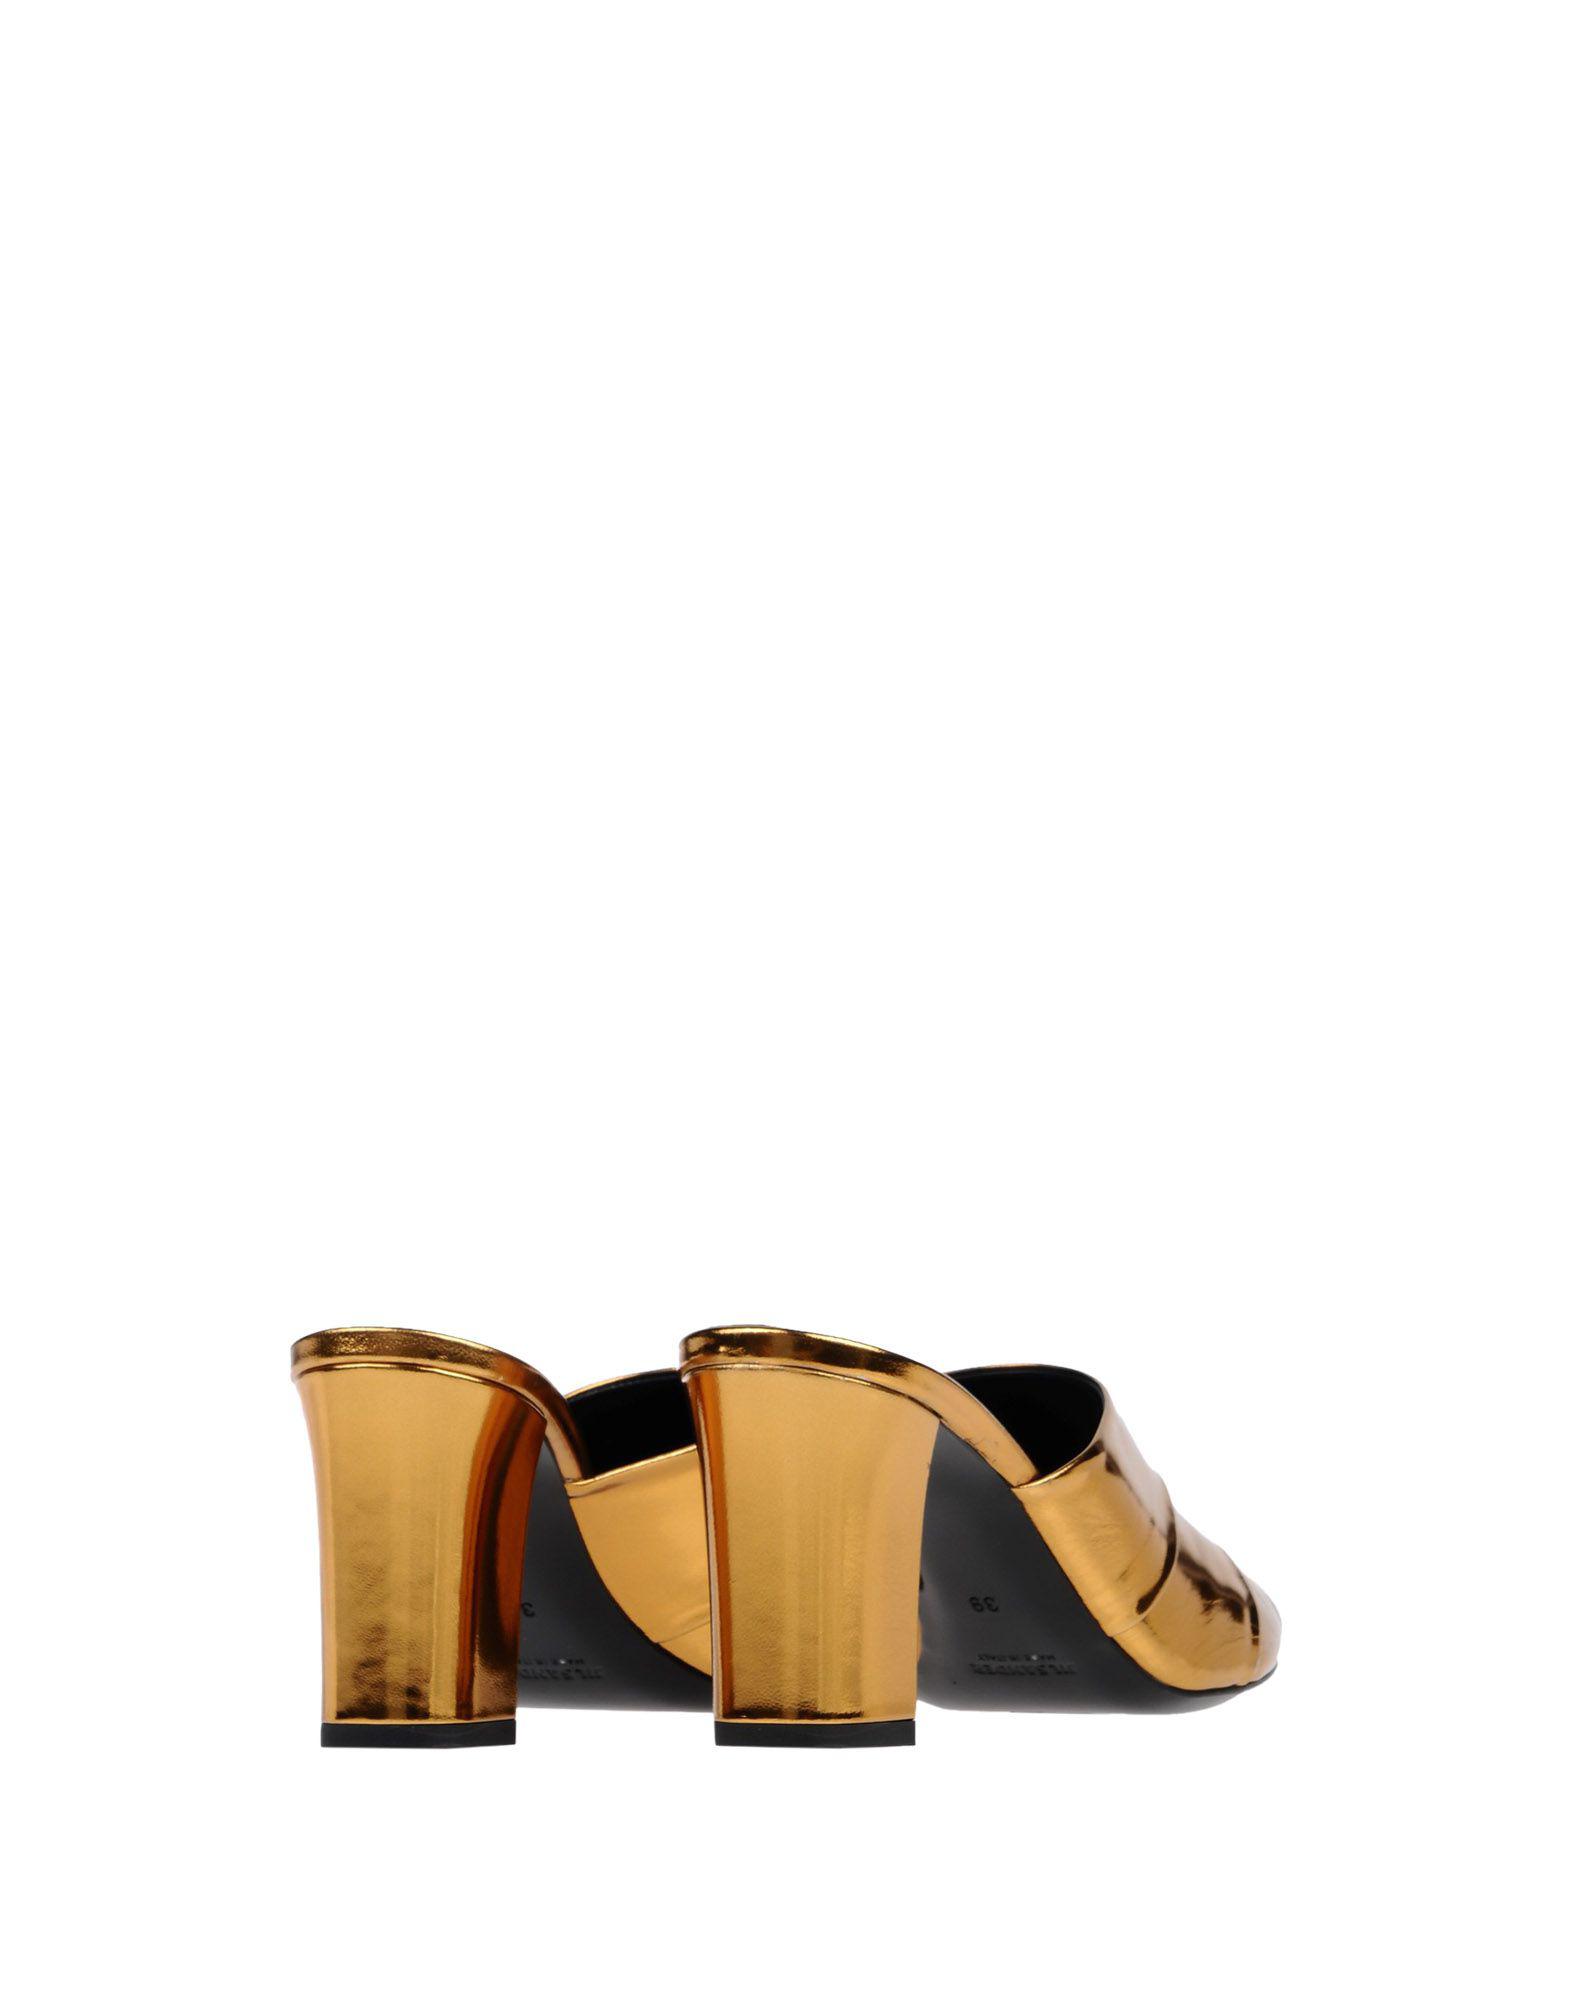 Jil Sander Leather Sandals in Gold (Metallic) - Lyst